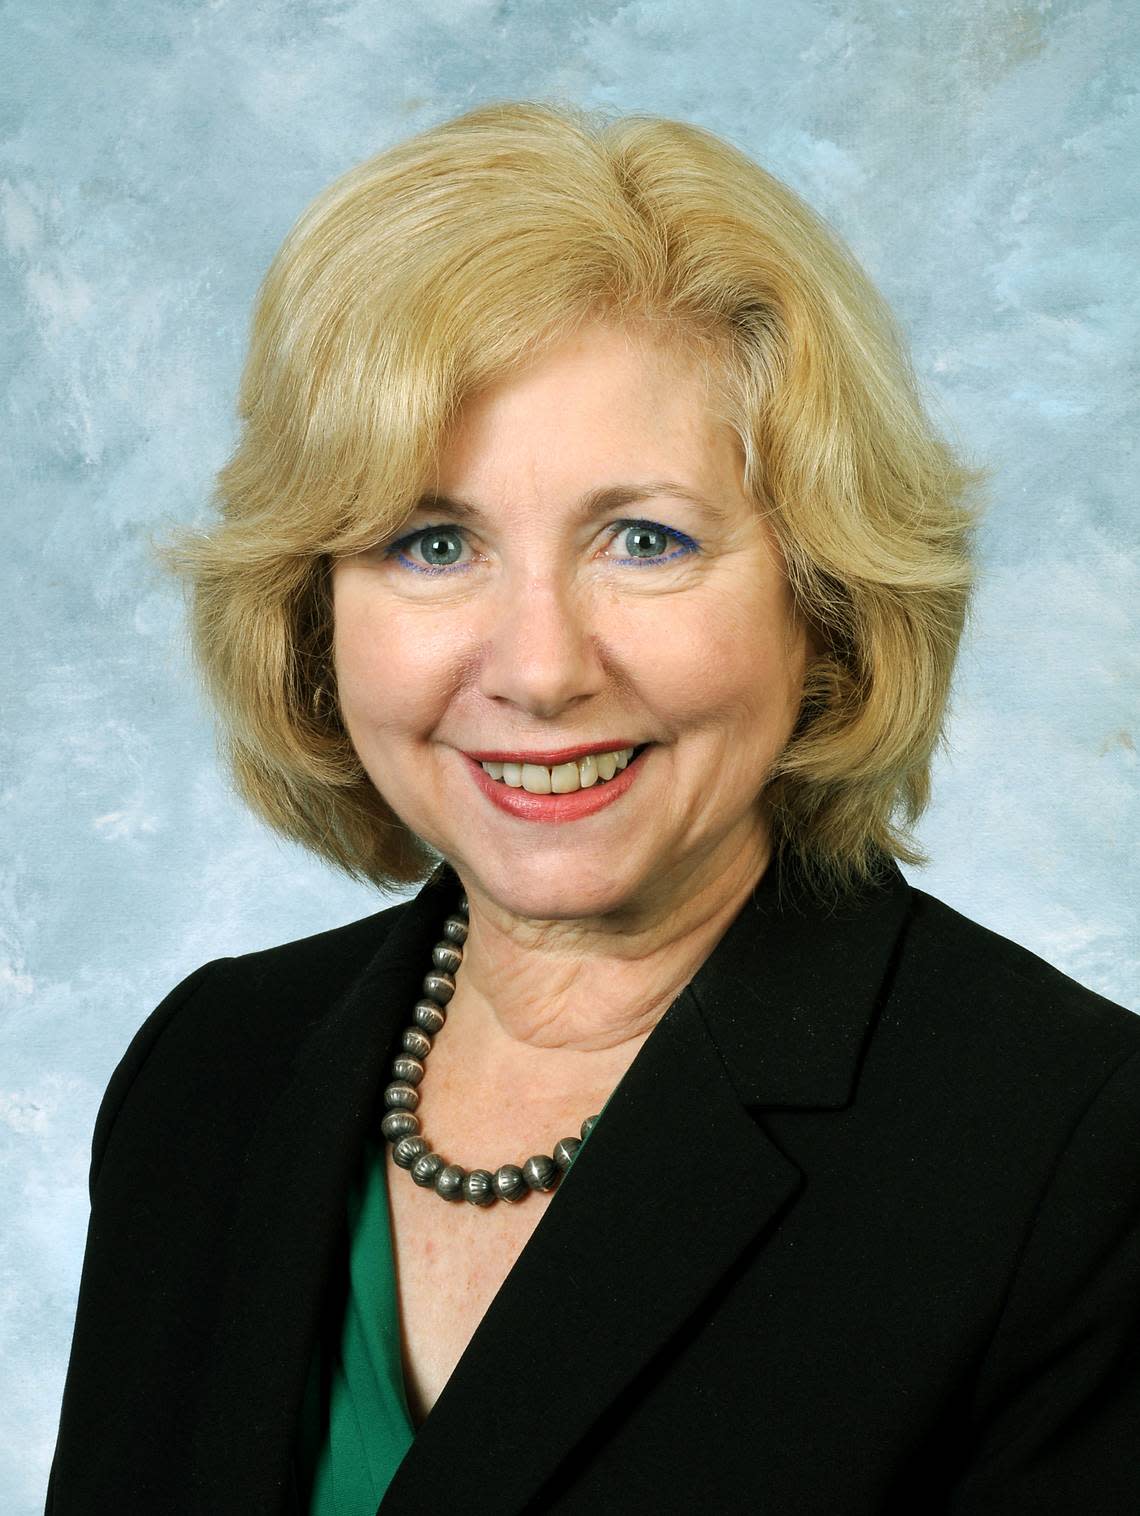 State Rep. Lisa Willner